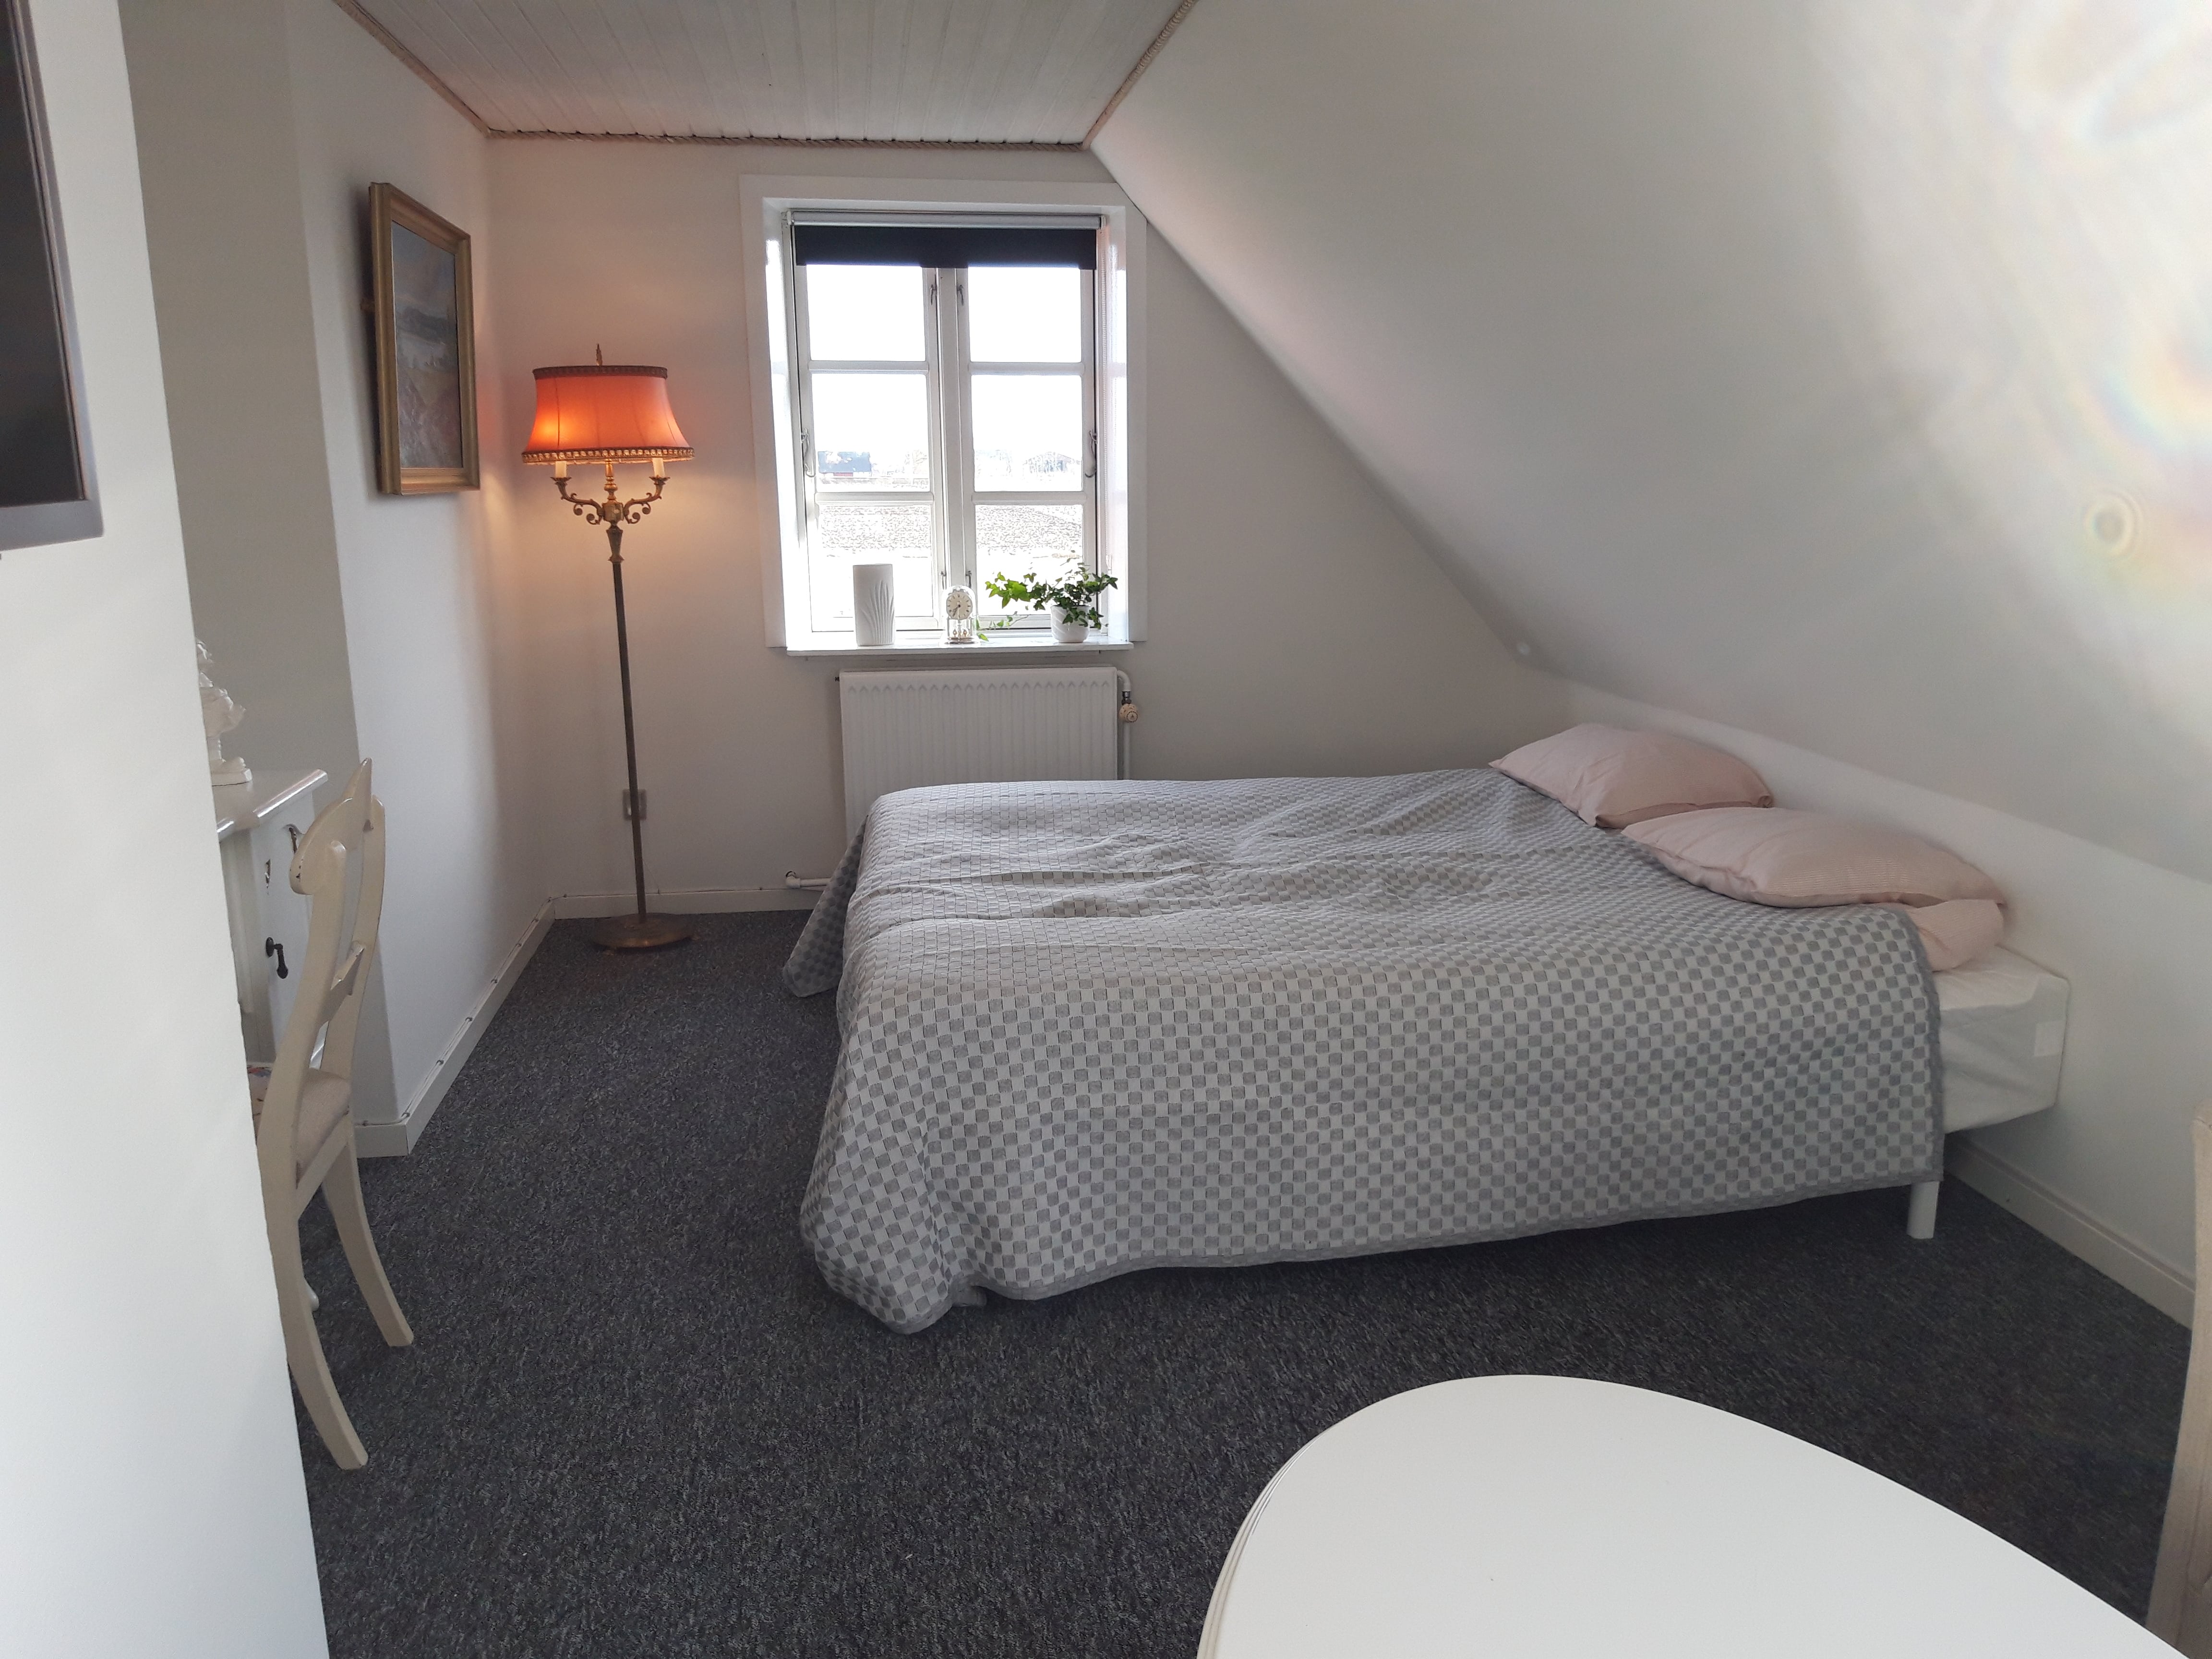 Bobbasinas værelse på Møllevang bed & breakfast